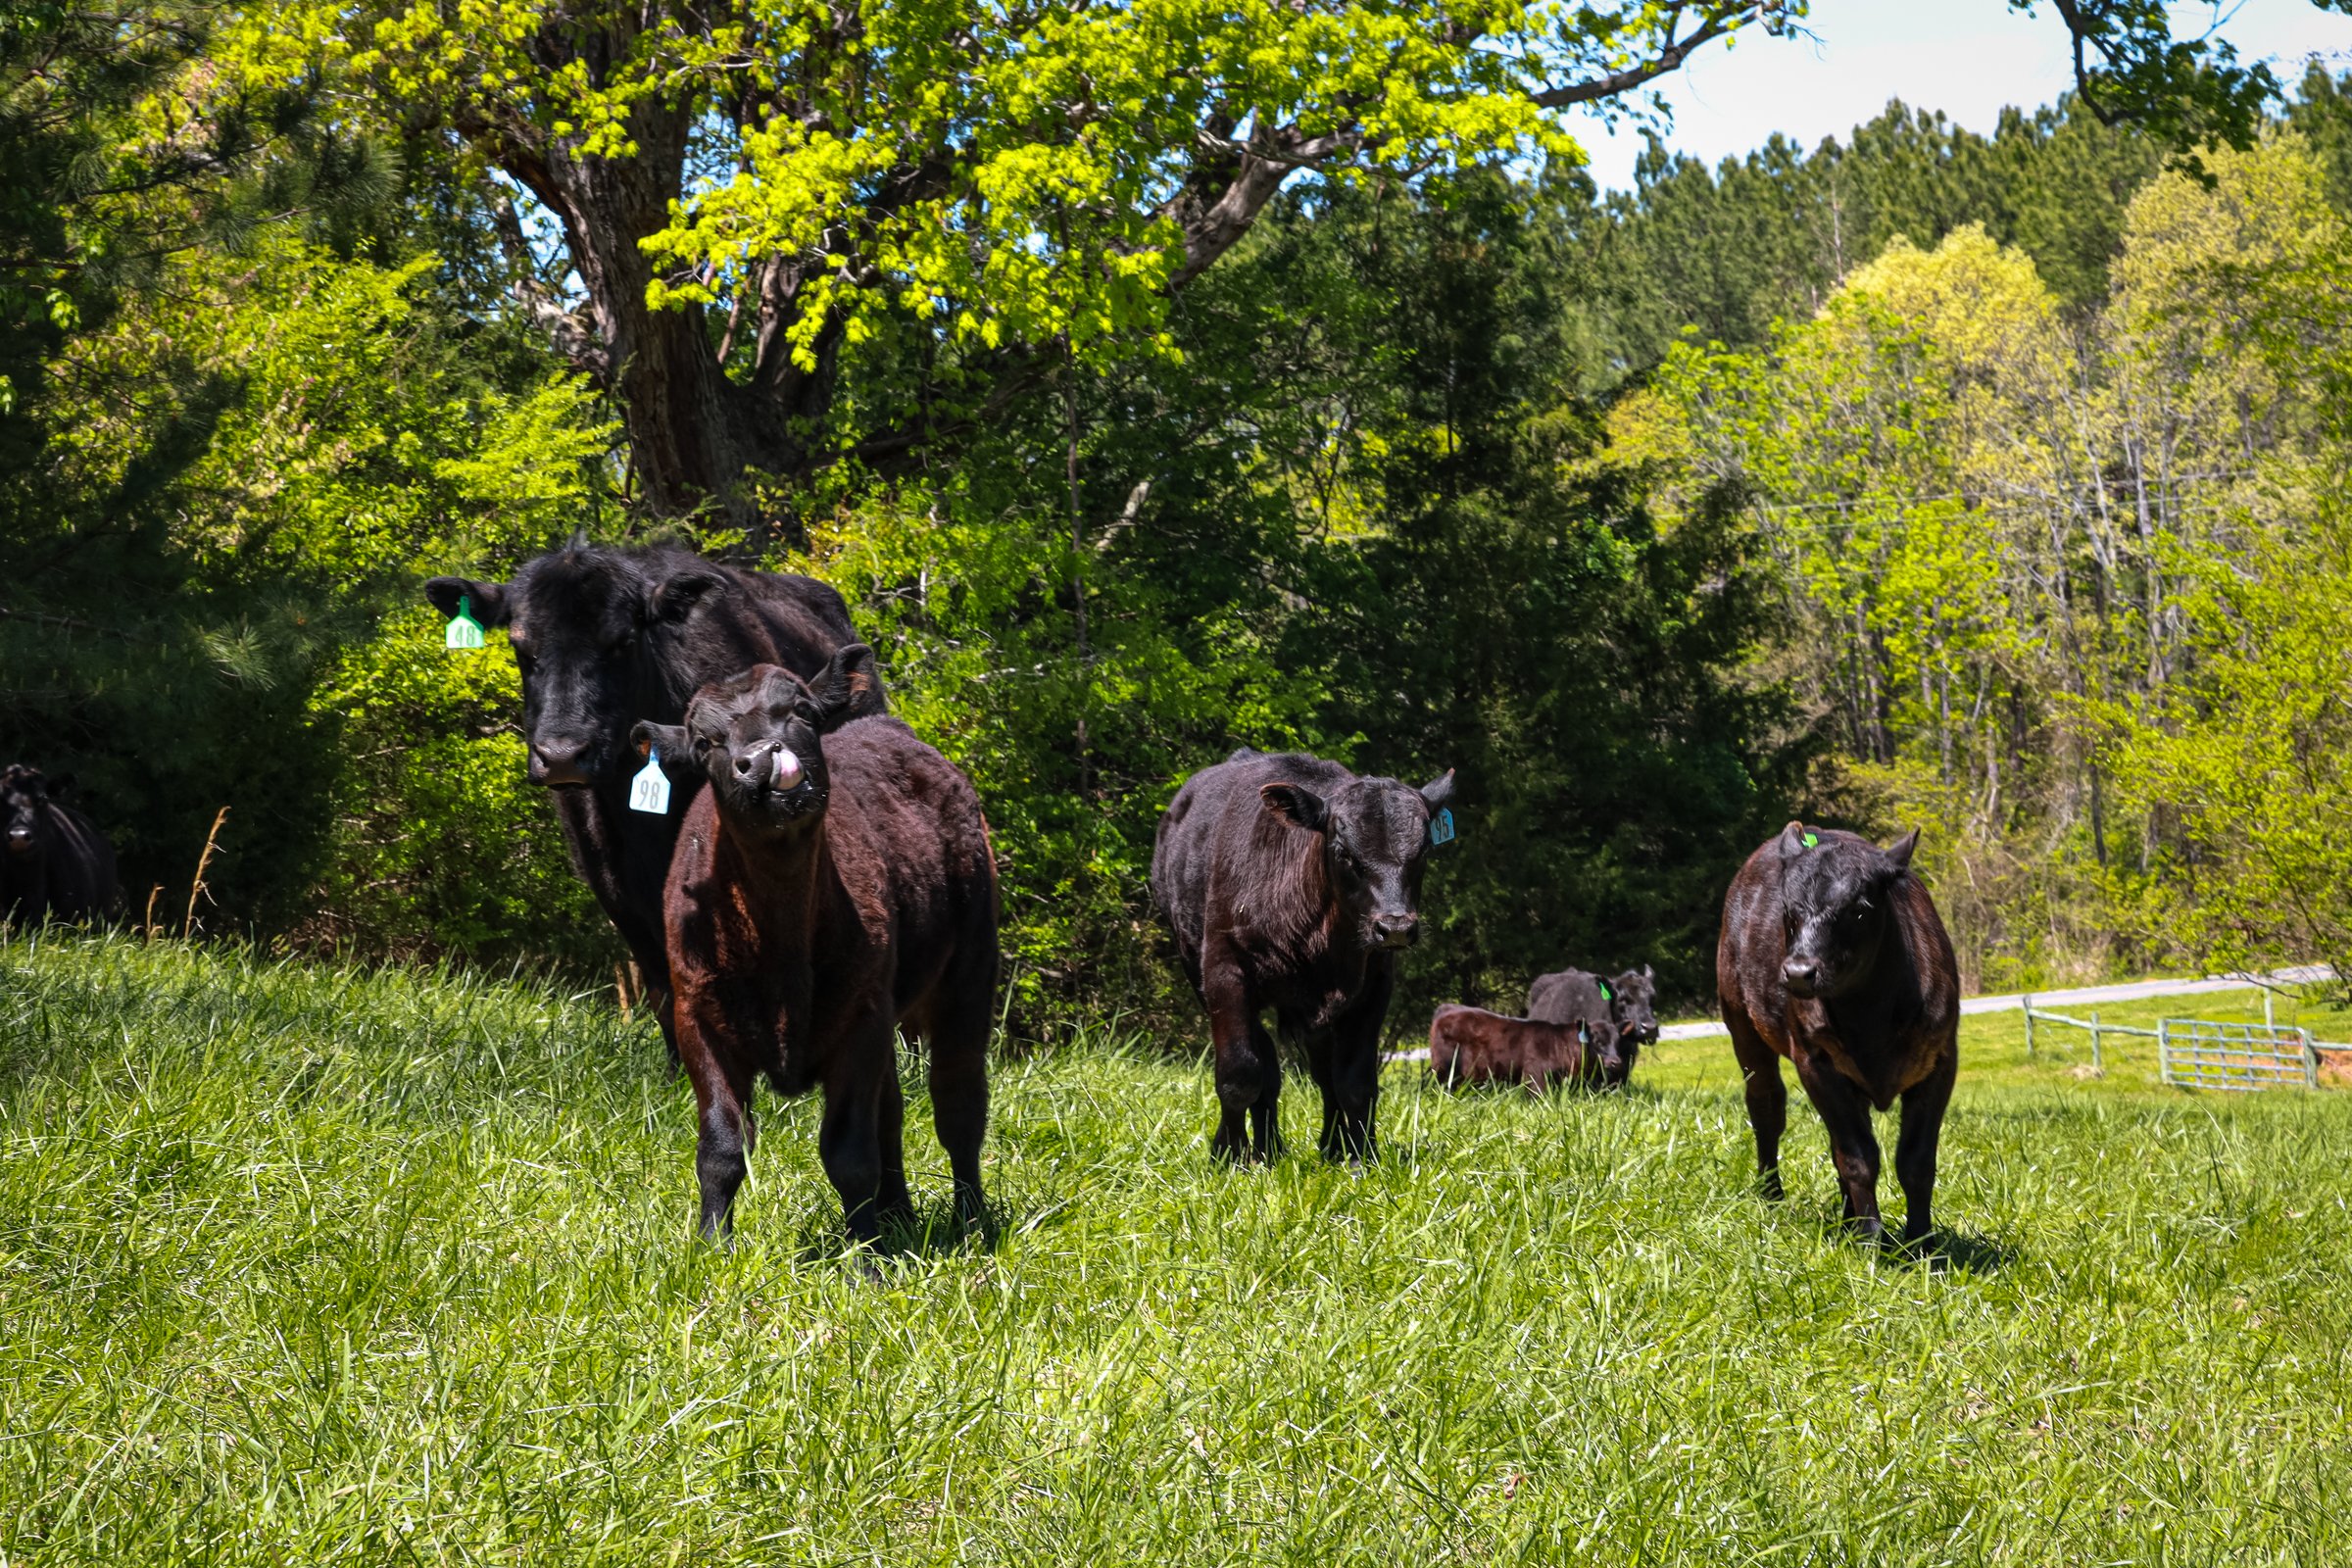 Black Angus Cattle